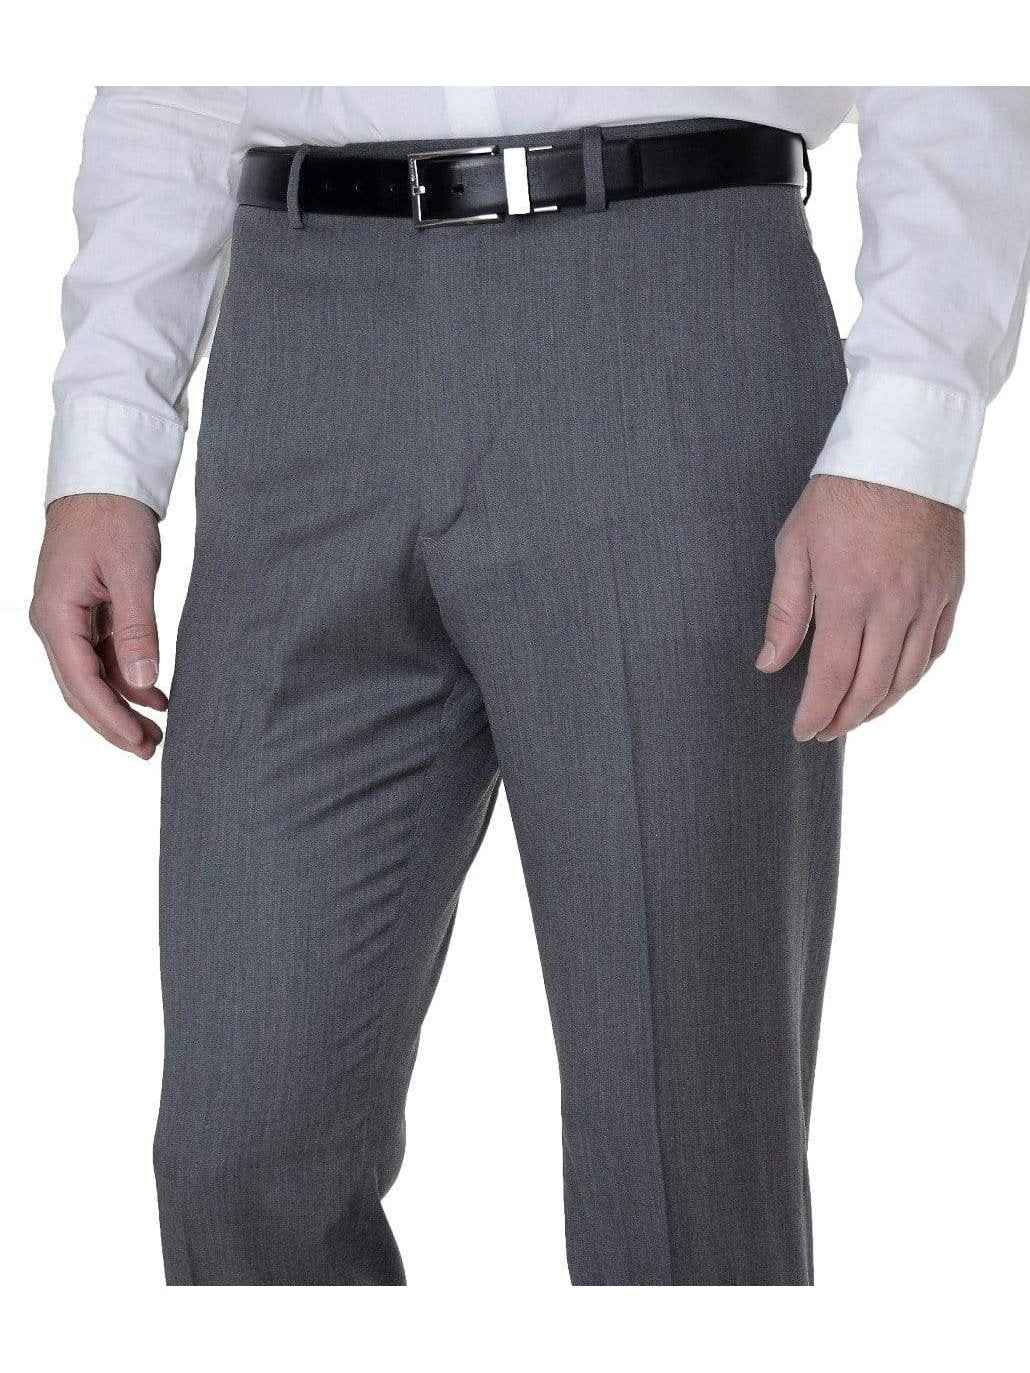 Tommy Hilfiger Mens Trim Fit Gray Textured Flat Front Wool Dress Pants - The Suit Depot